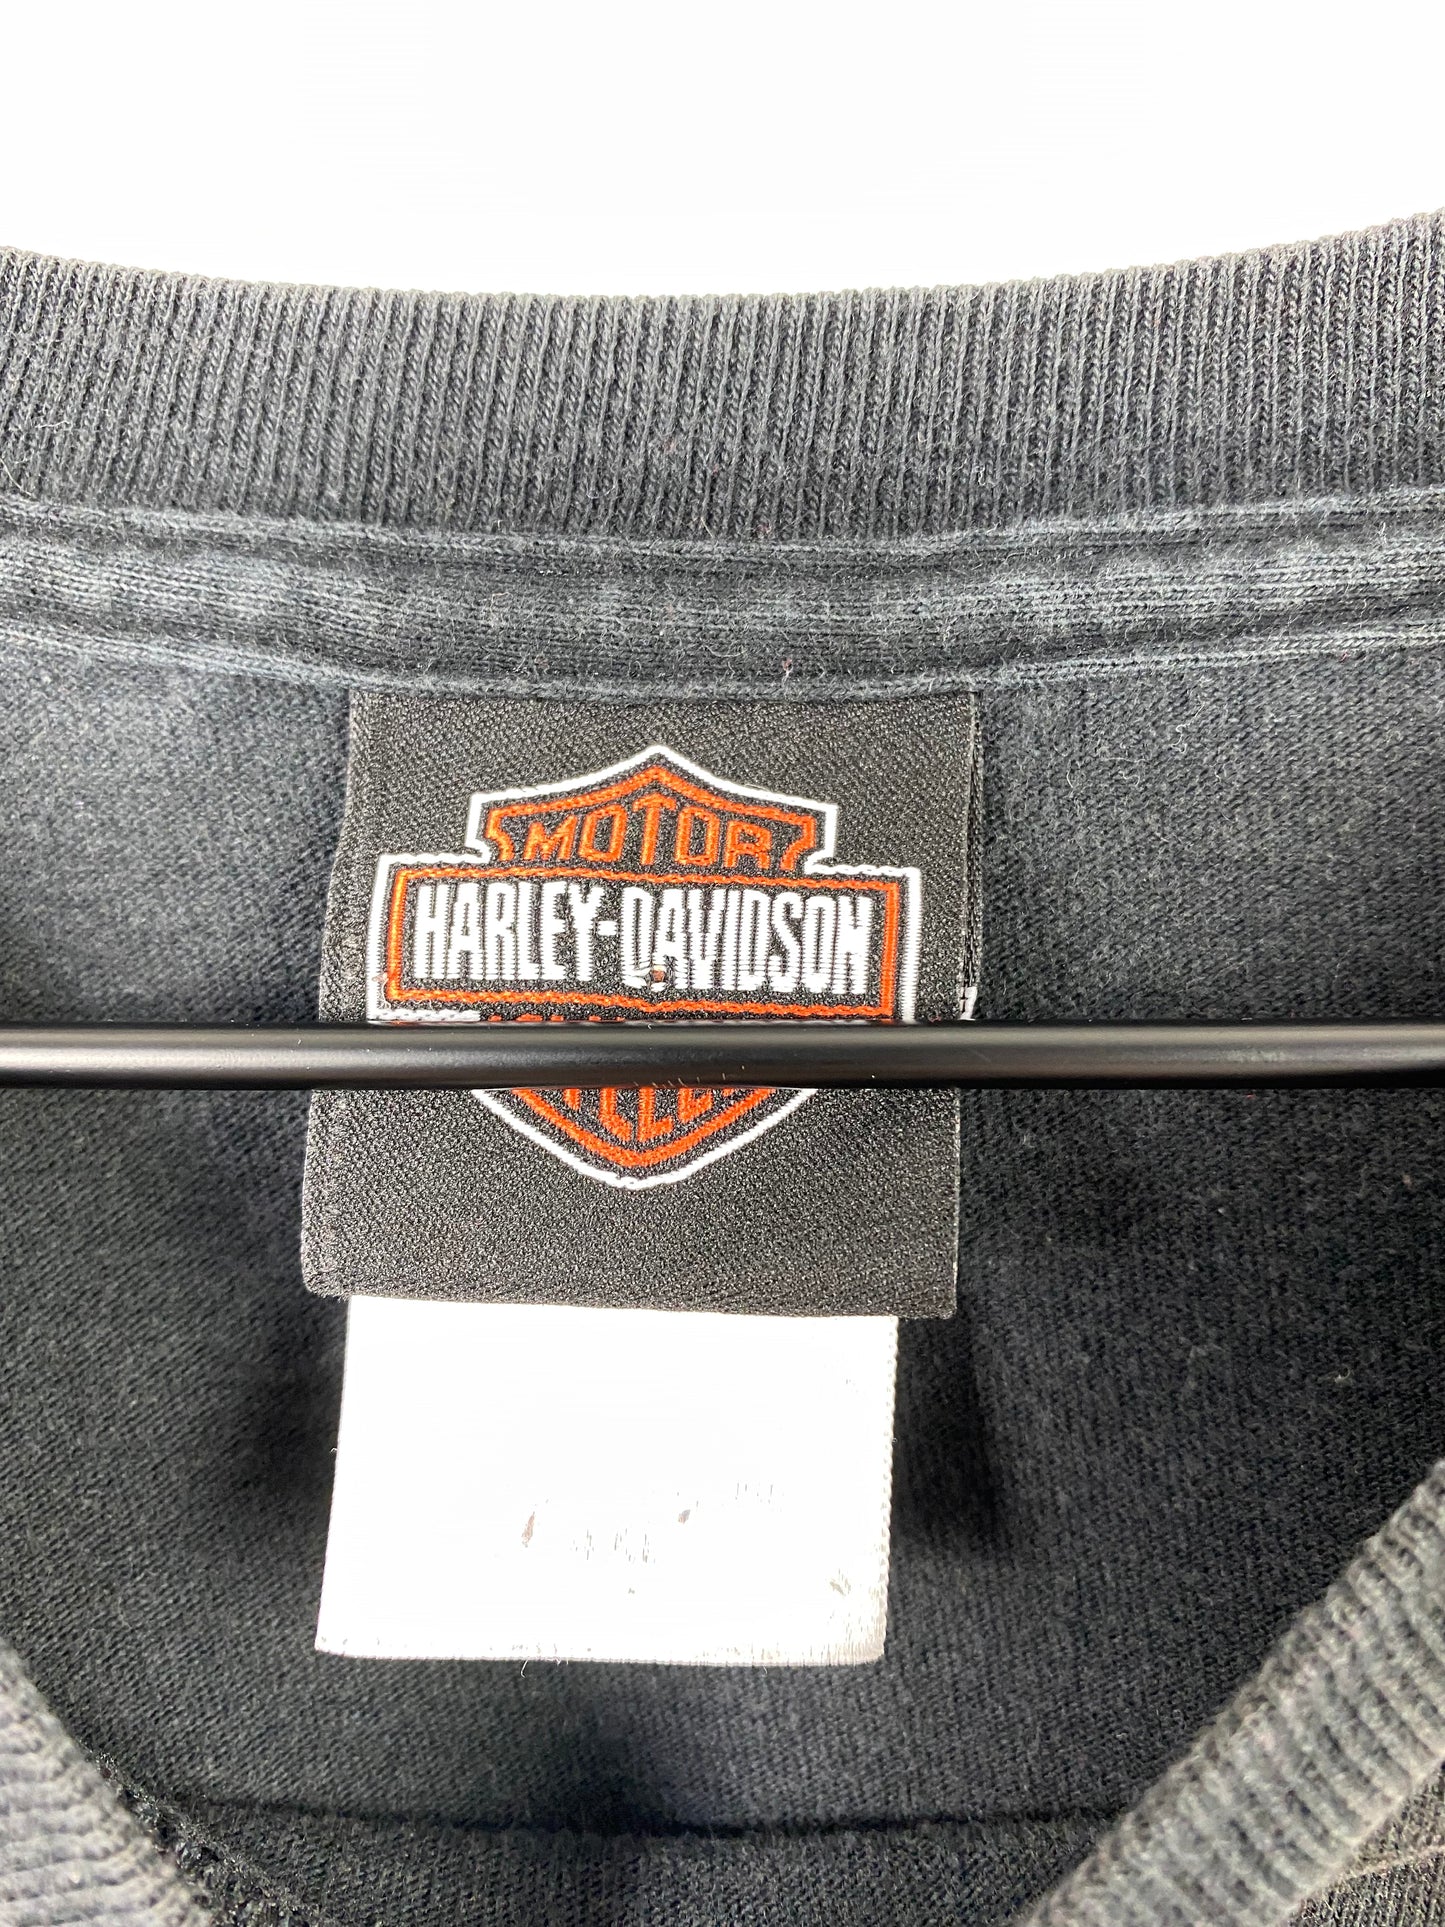 Harley Davidson T Shirt - 4XL